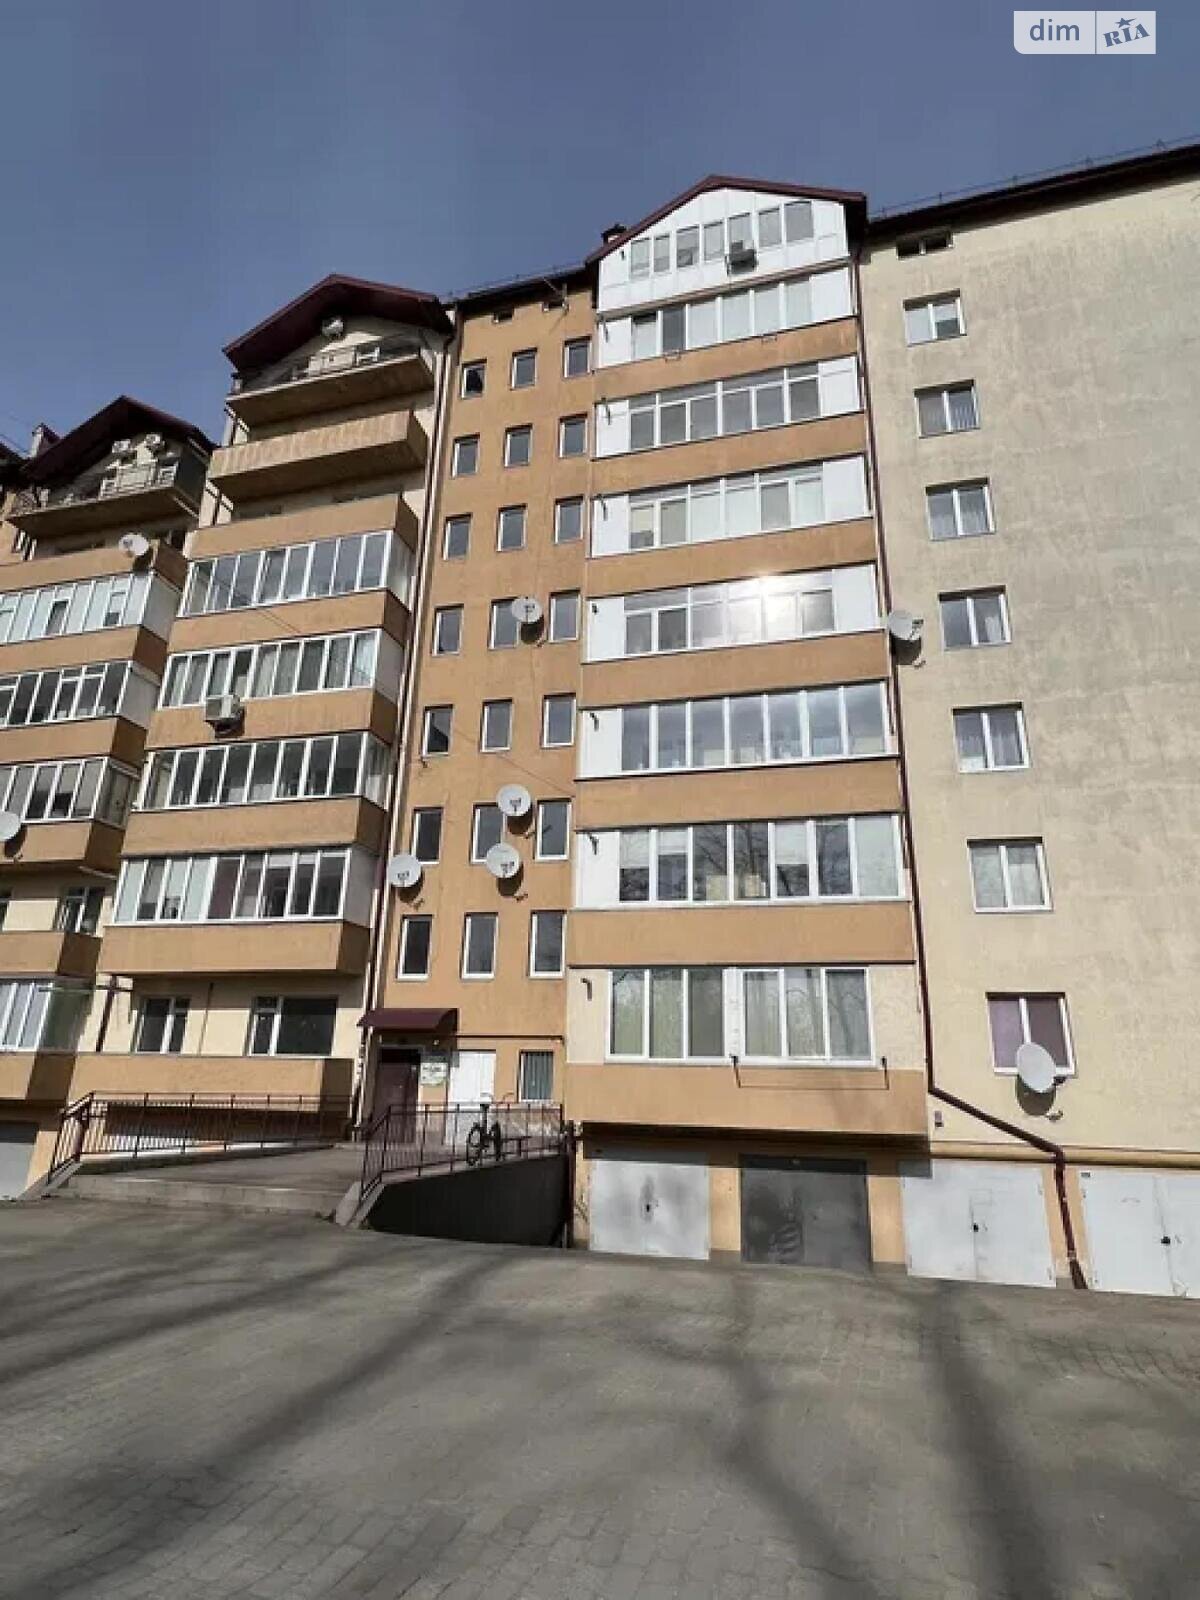 Продажа однокомнатной квартиры в Ивано-Франковске, на ул. Федорченко 1А, район Ринь фото 1